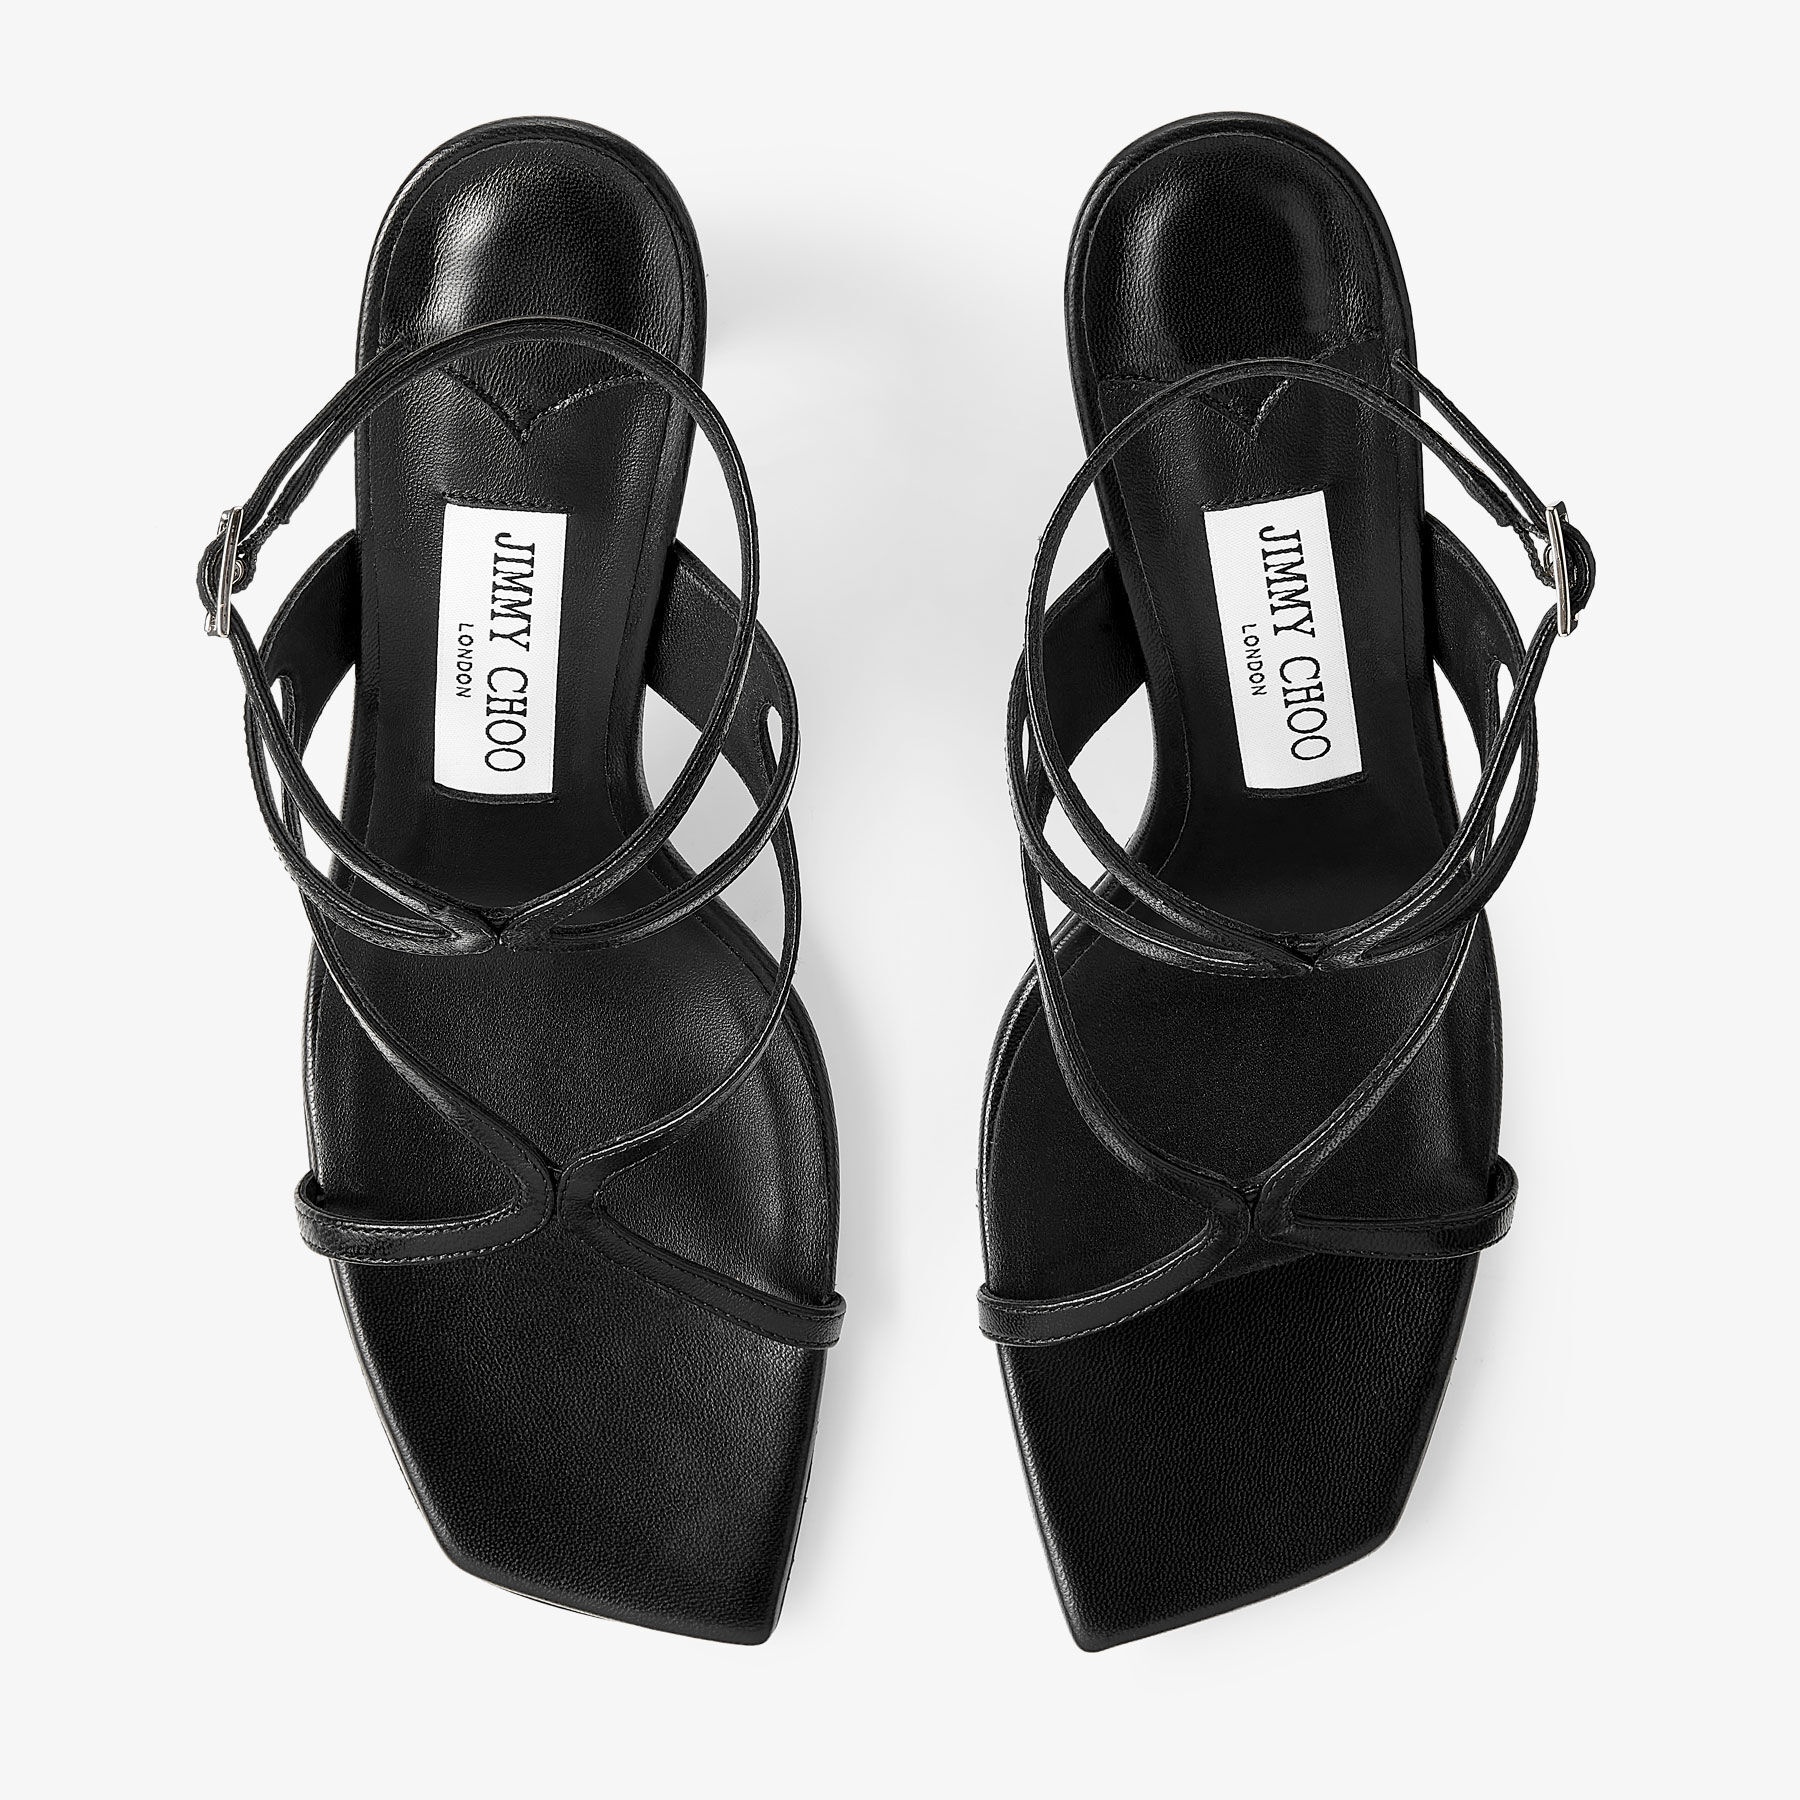 Azie 85
Black Nappa Leather Sandals - 4